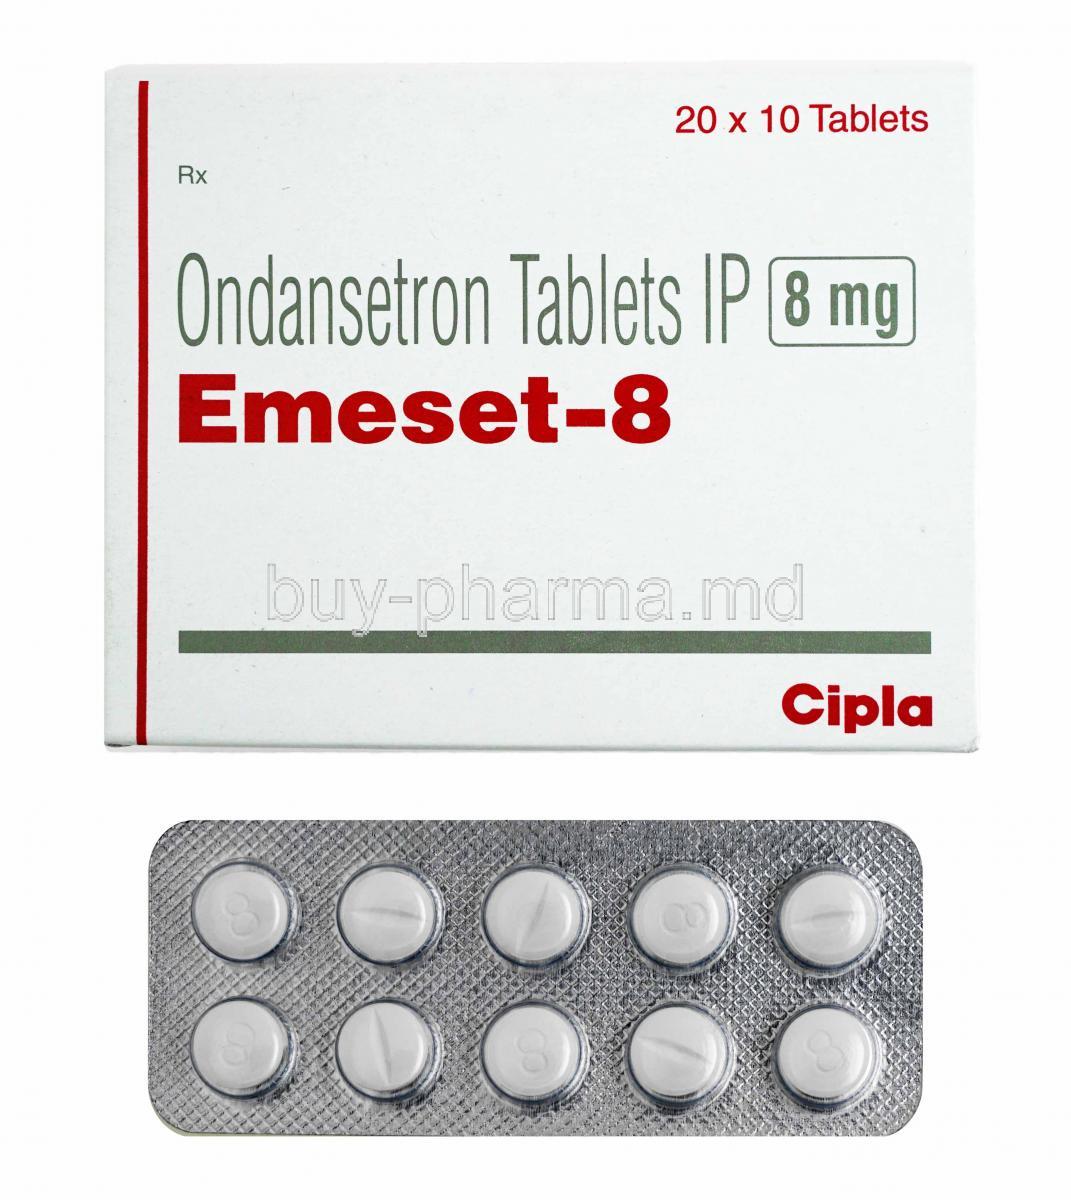 Emeset, Ondansetron 8mg box and tablets